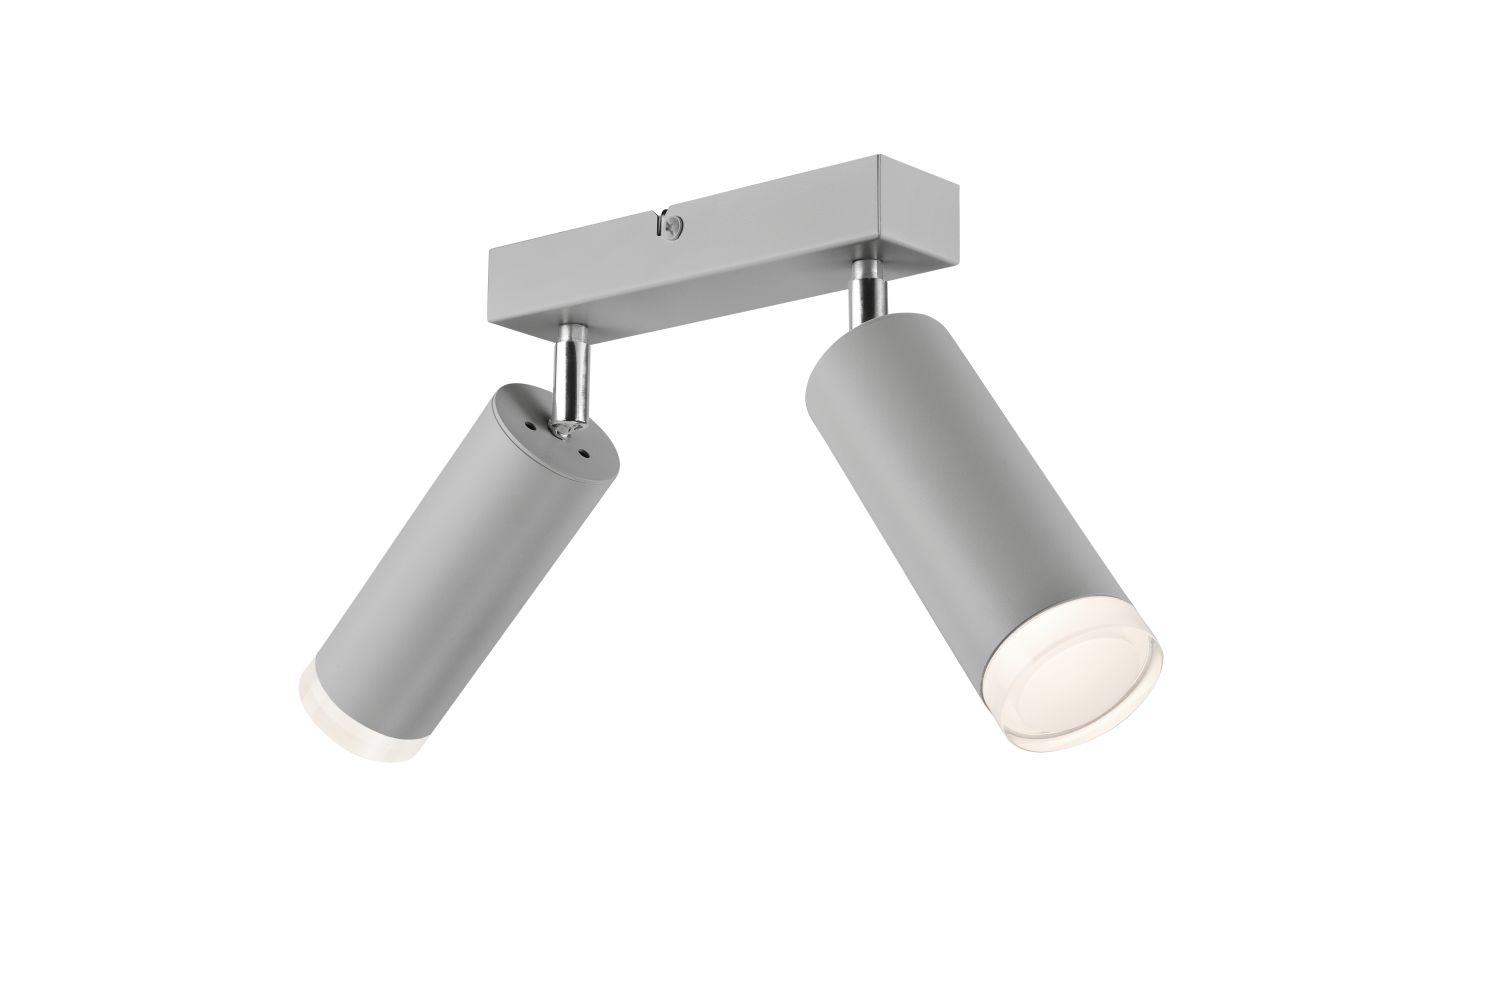 Deckenstrahler Spot Silber Modern Aluminium Lampe